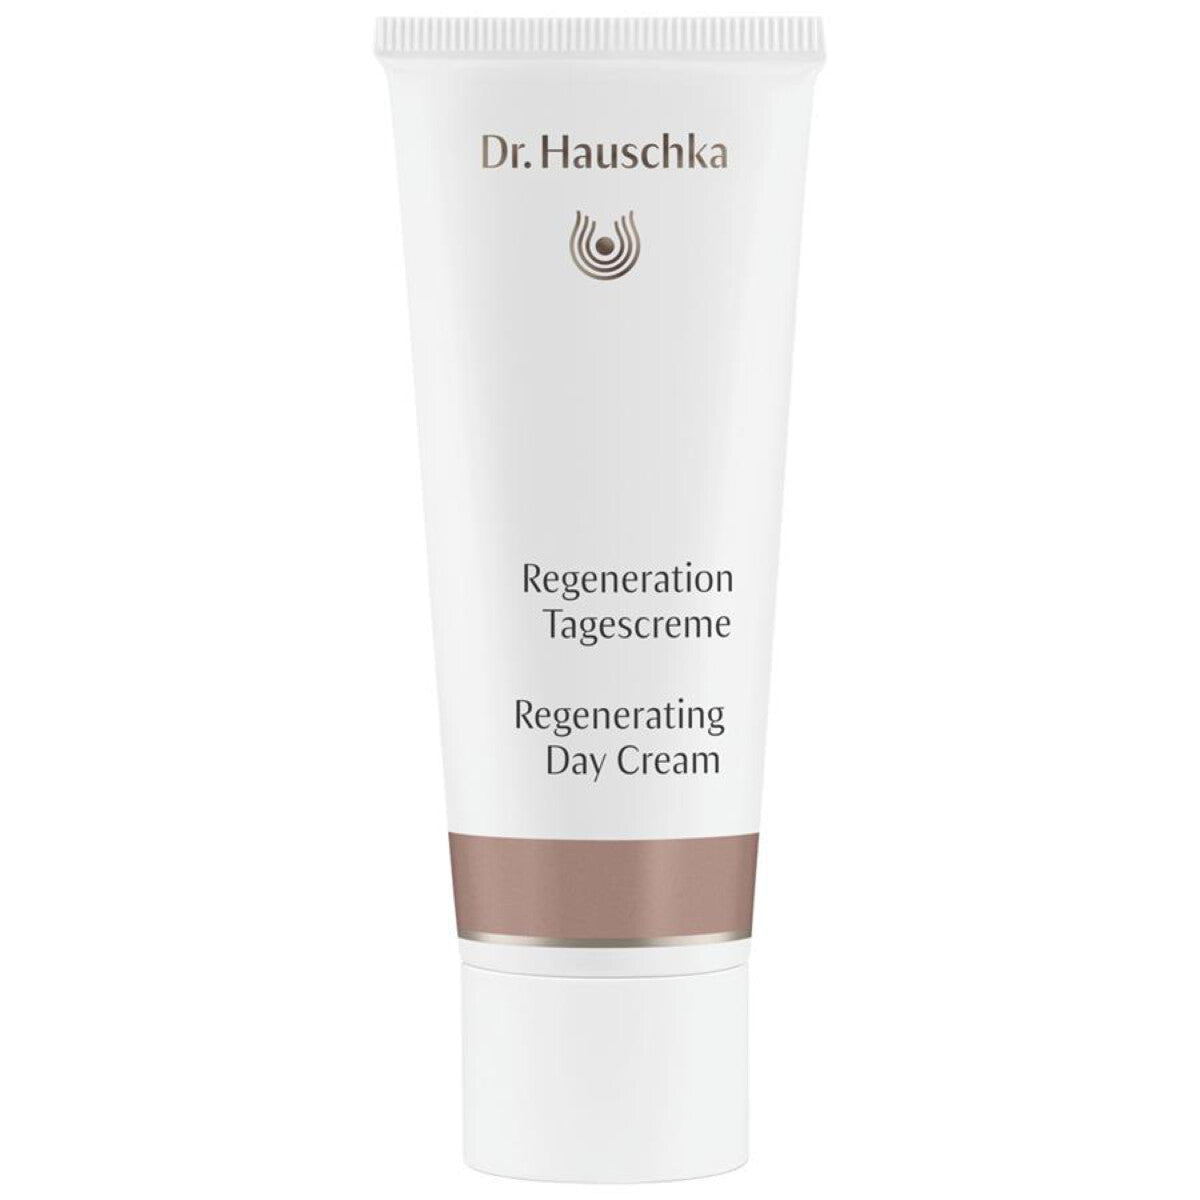 DR. HAUSCHKA Regeneration Tagescreme - 40 ml